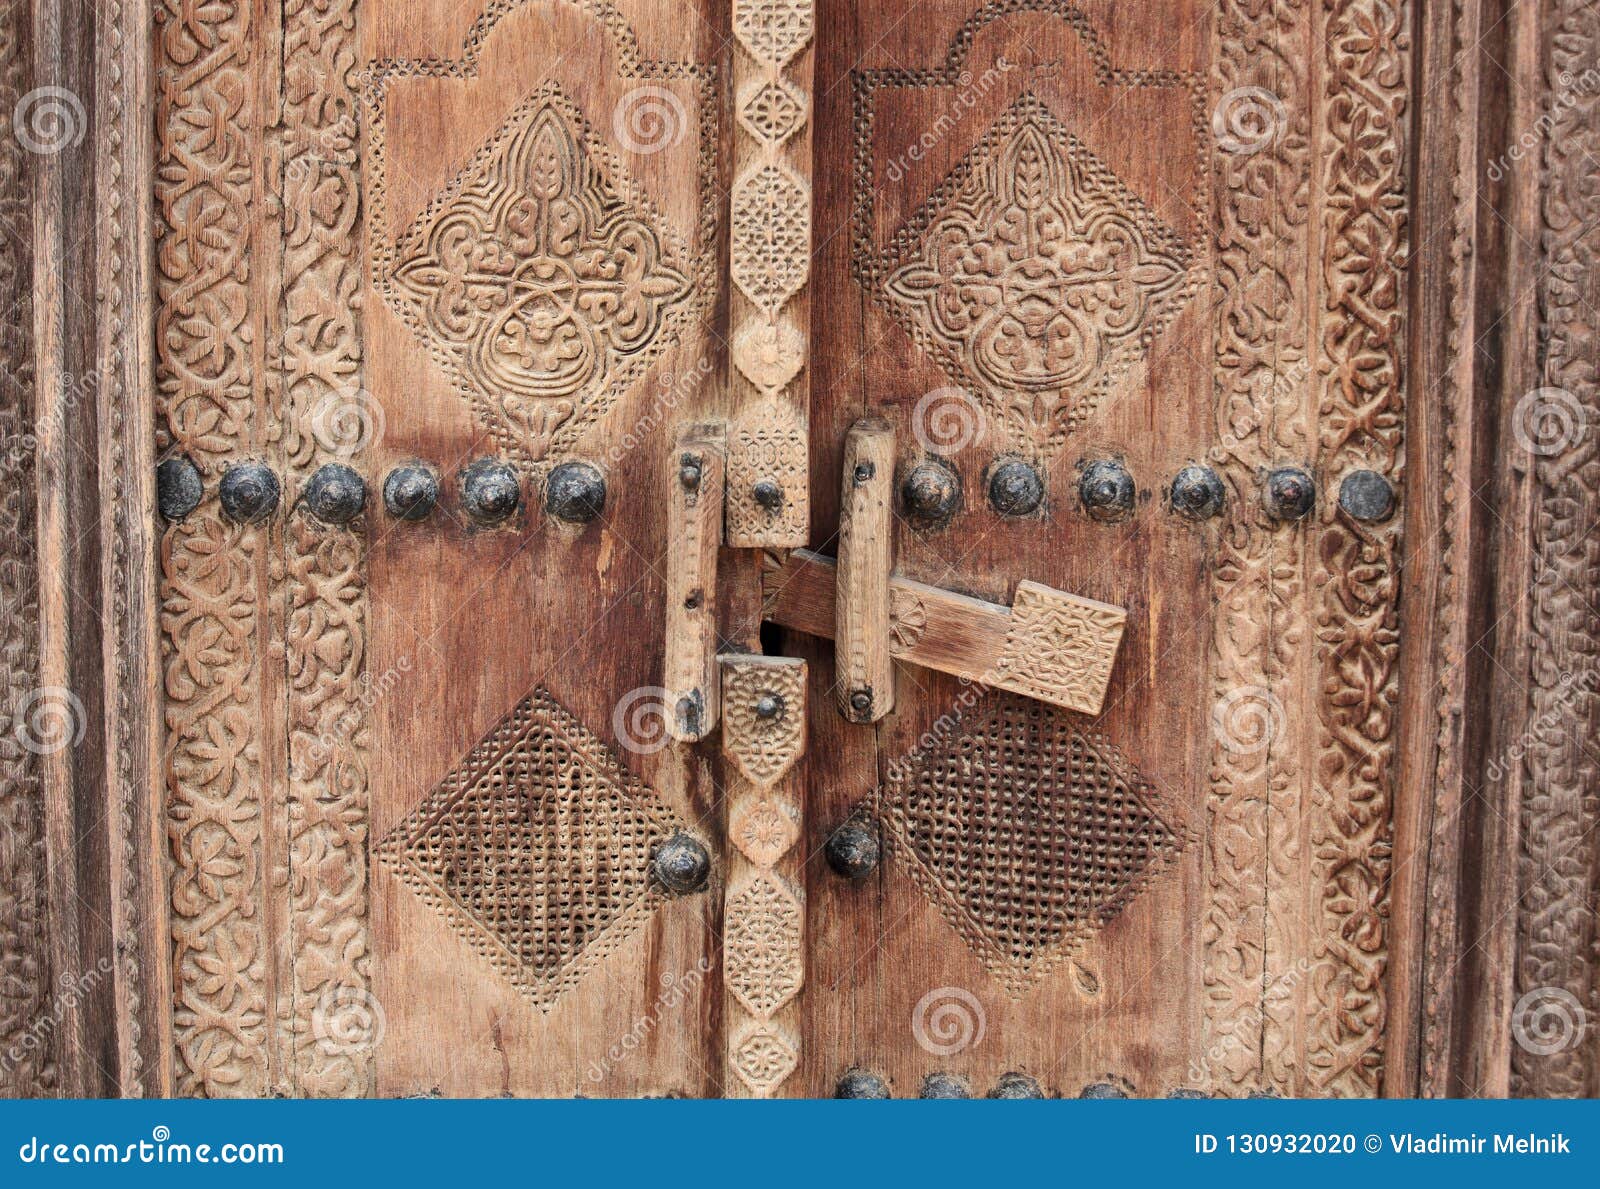 carved wooden door and ornate doorway in bahrain